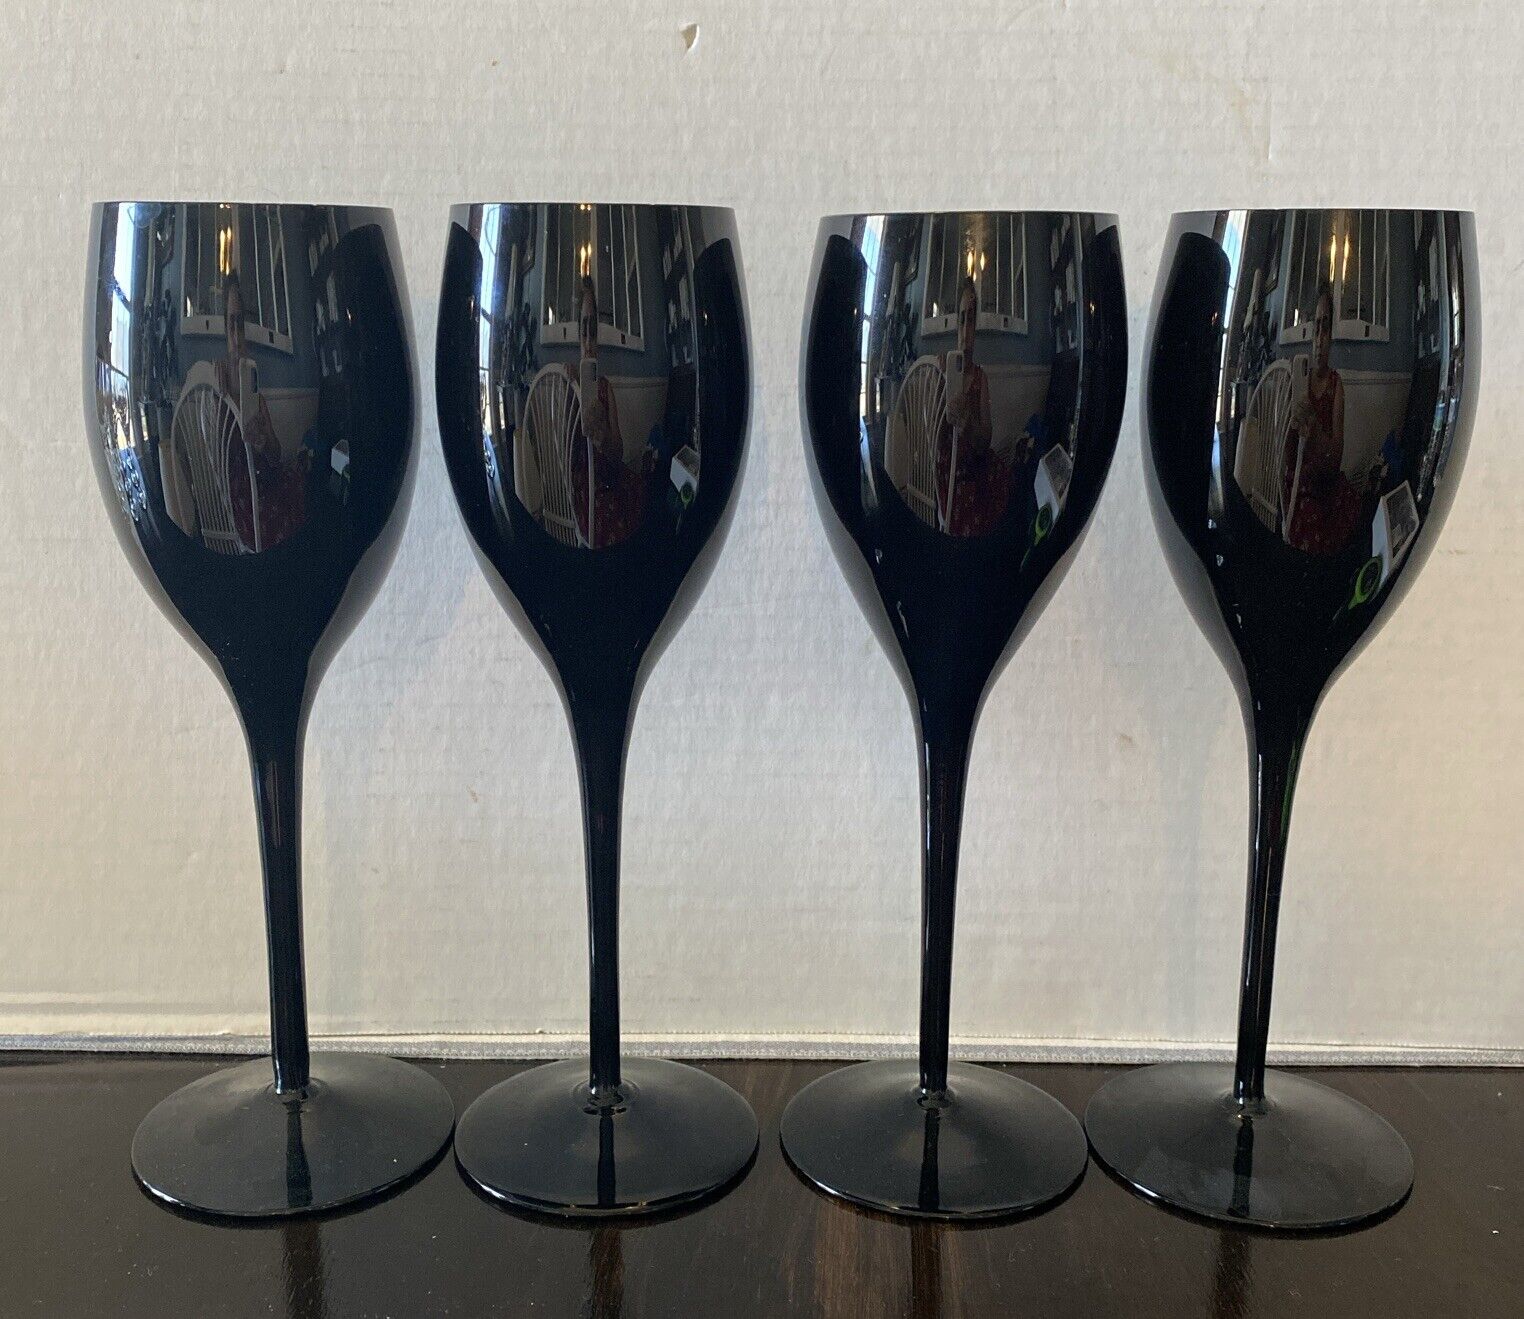 Mikasa Elegance Elite Black Wine Glasses Set Of 4 Vintage Stemware New Condition